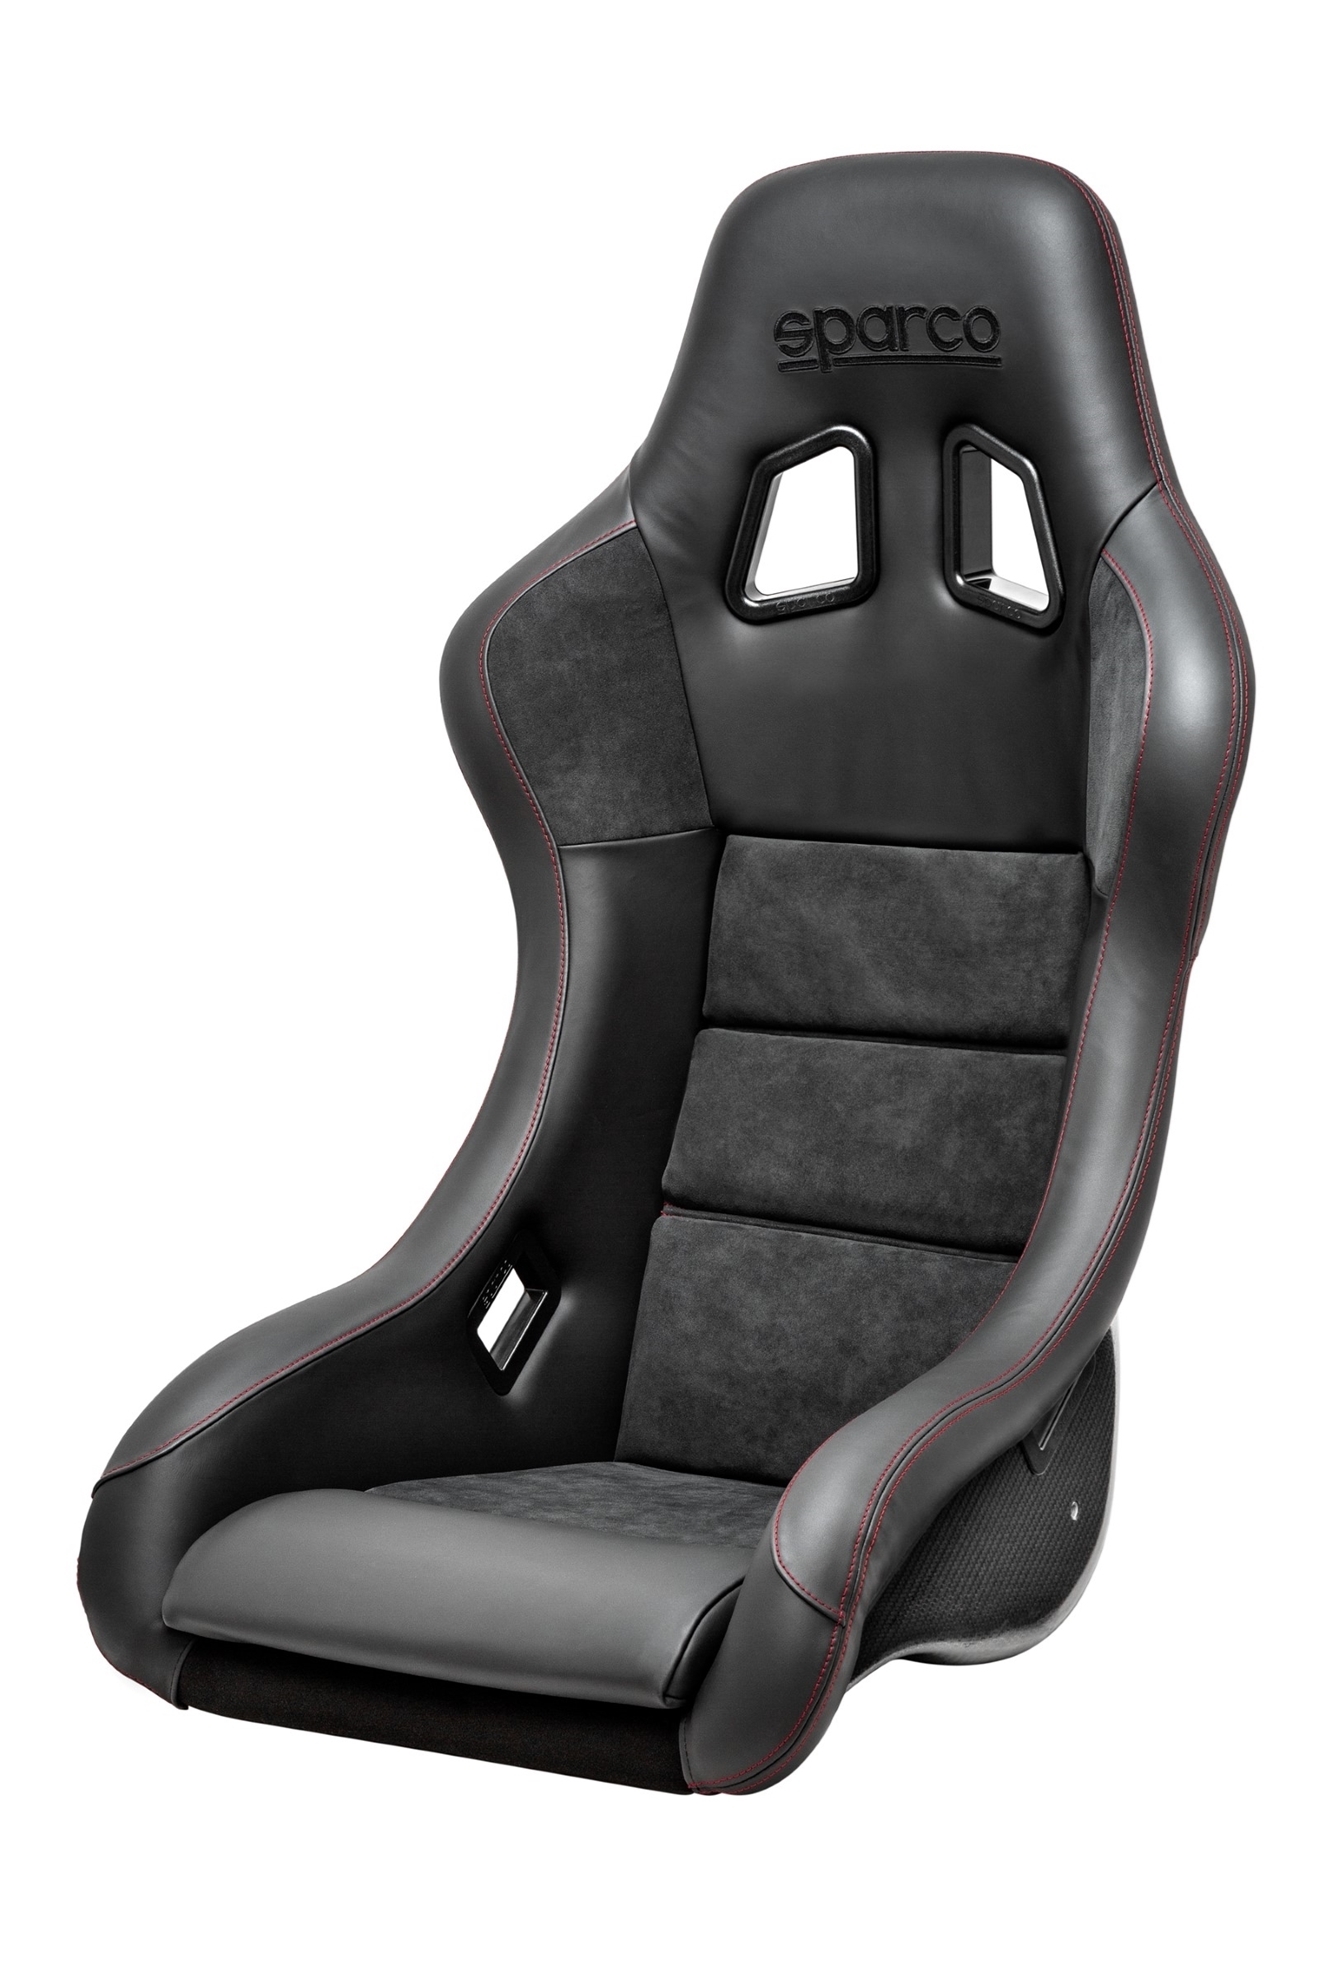 Sparco QRT-C PERFORMANCE Seat (CARBON) - Black/Red Stitch